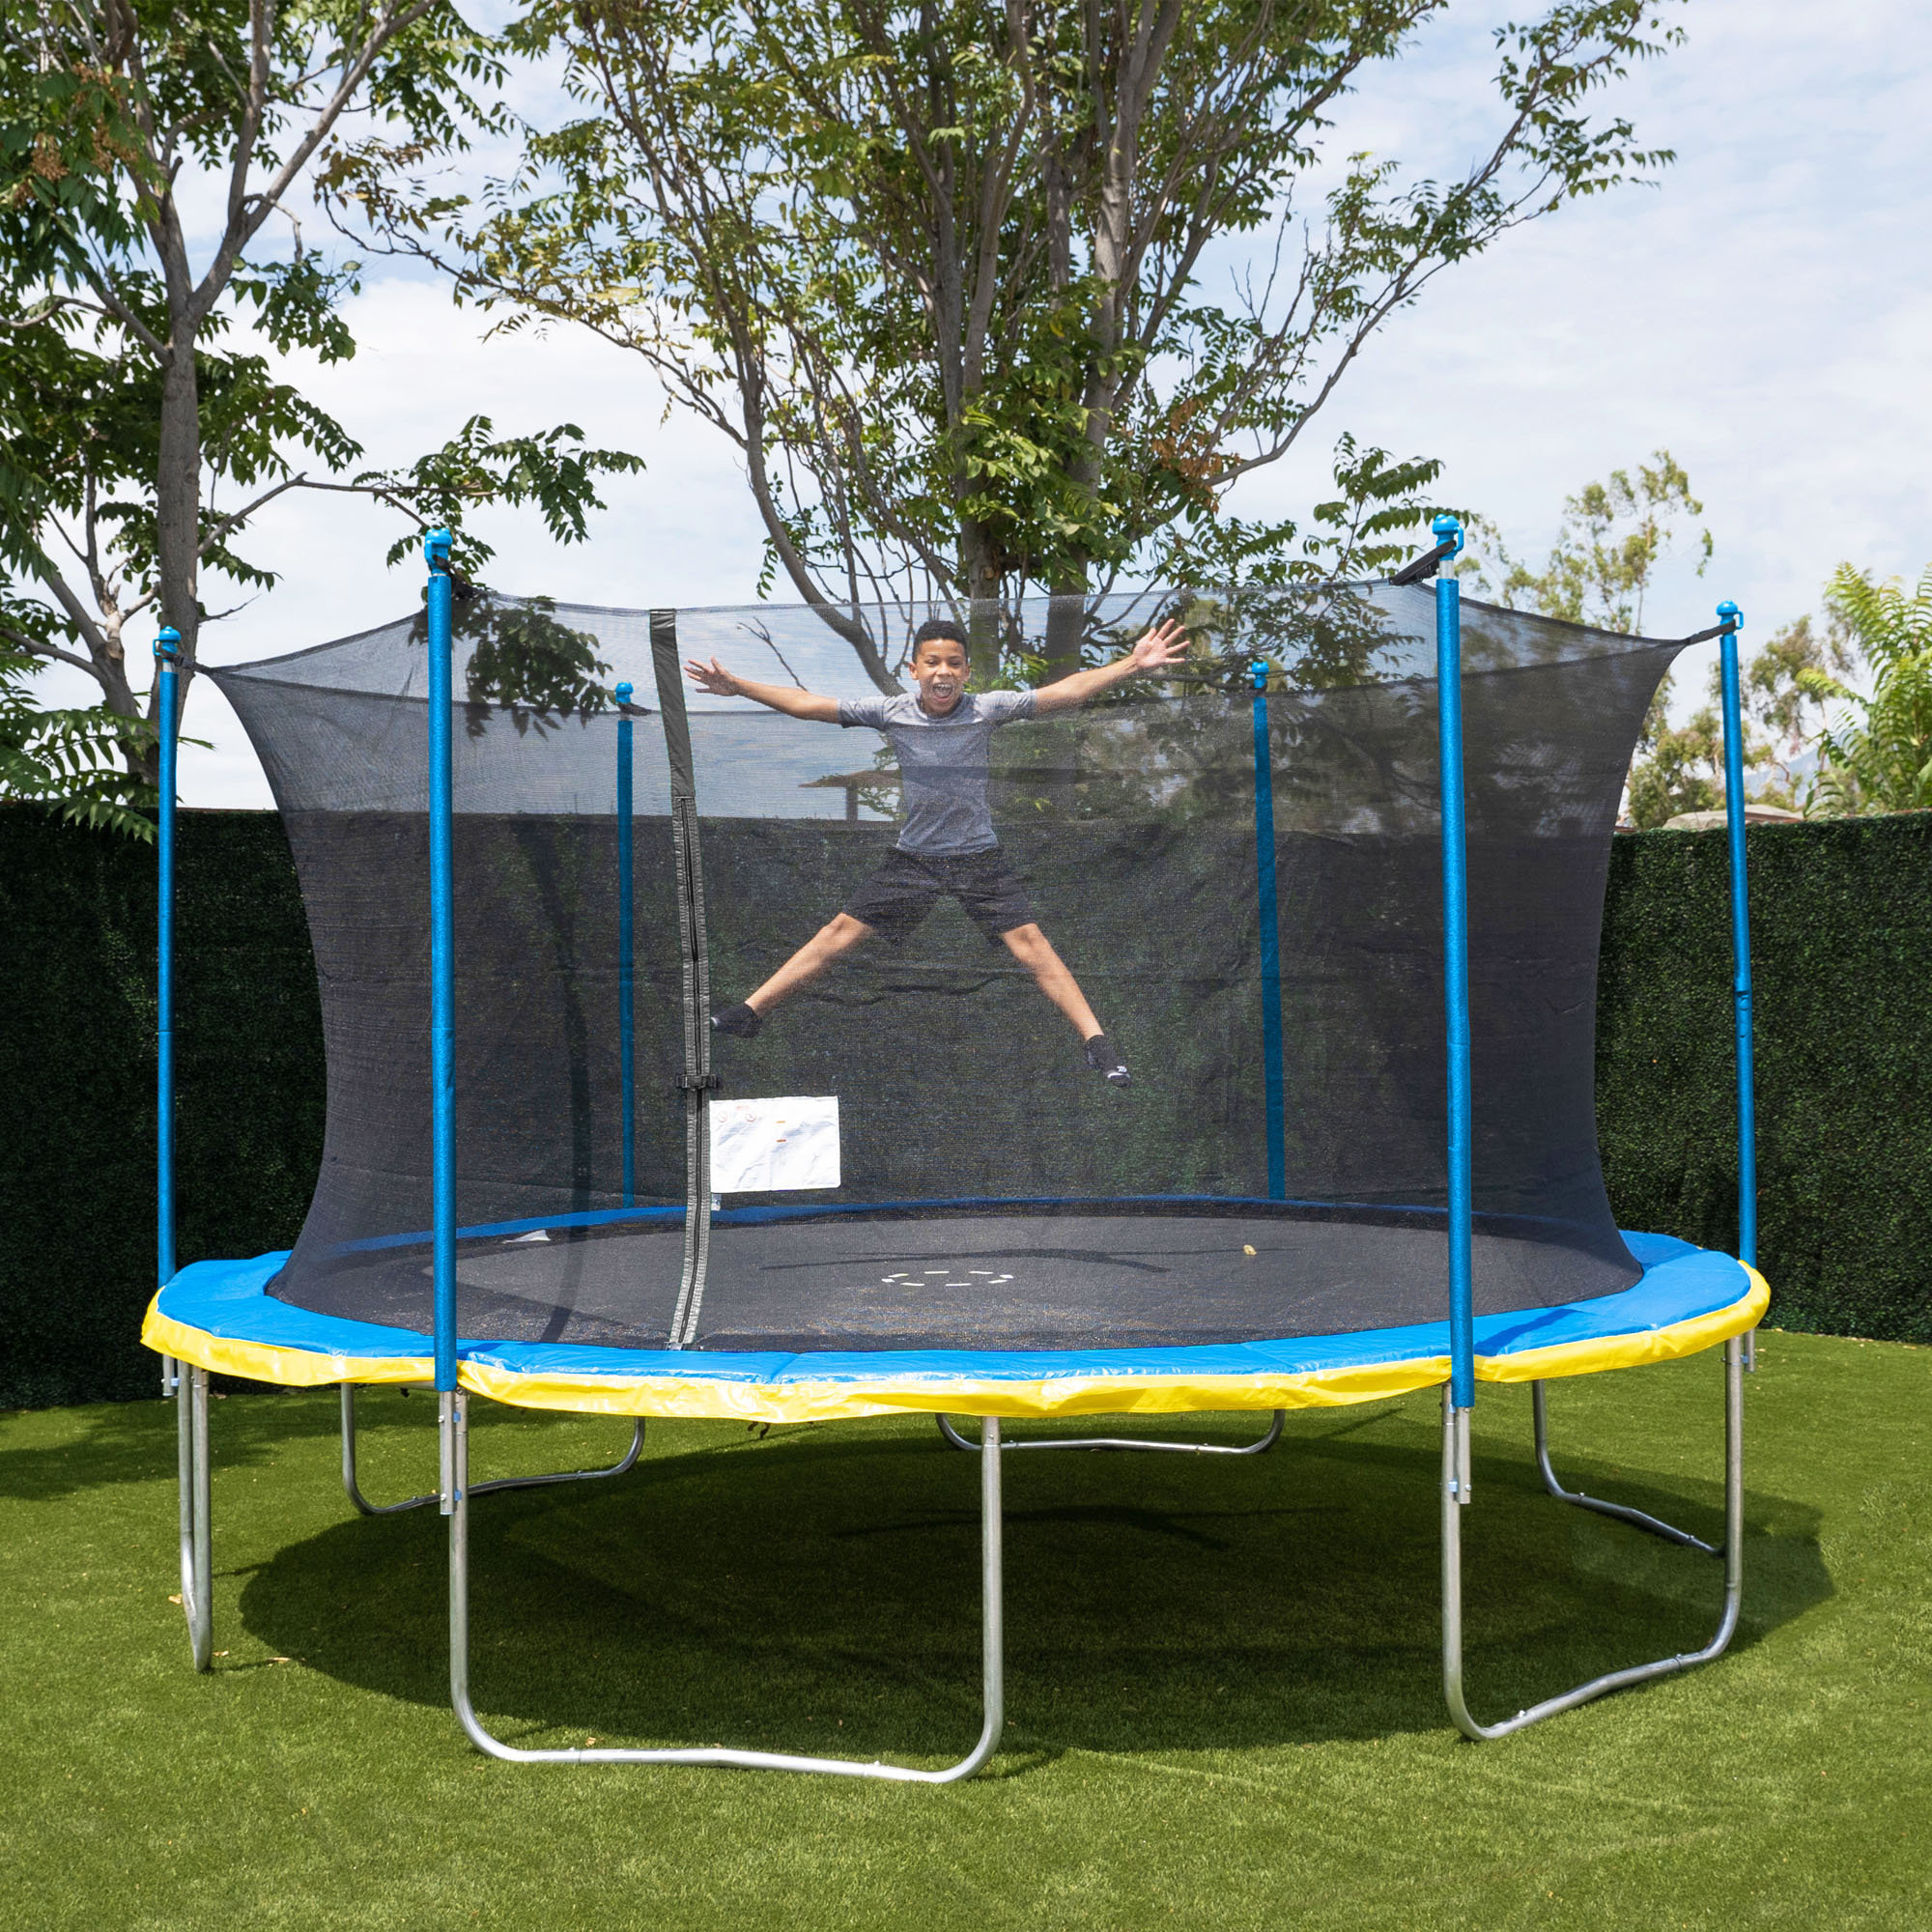 Trujump Round Backyard Trampoline with Safety Enclosure (Wayfair Exclusive) Reviews | Wayfair